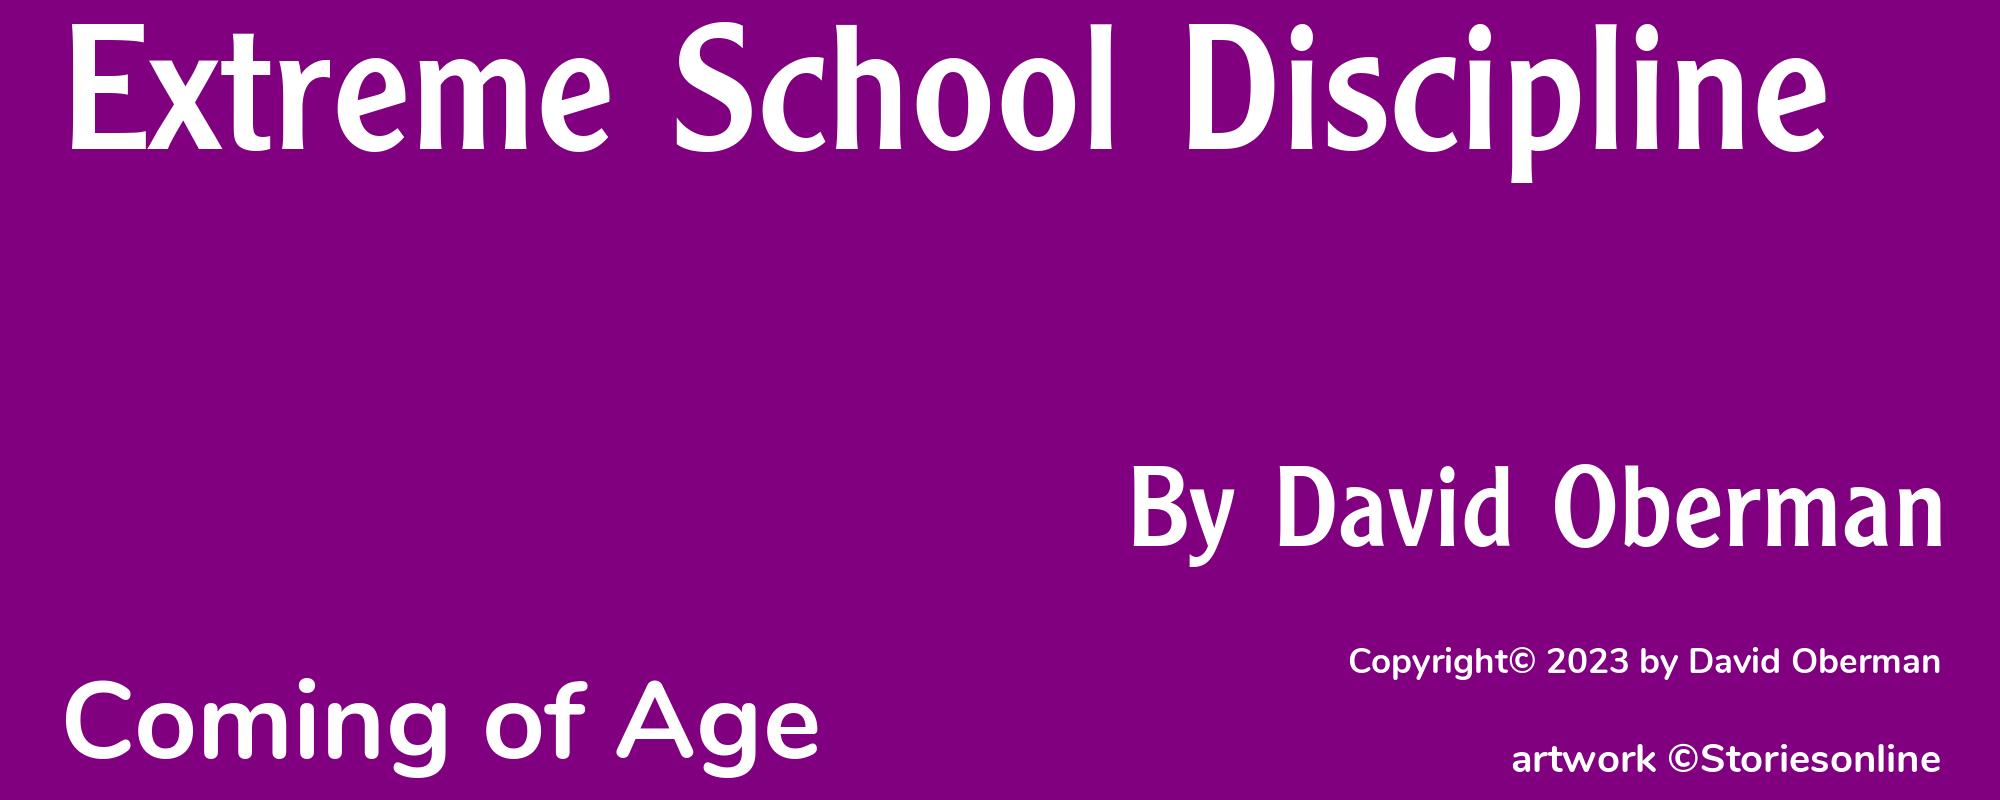 Extreme School Discipline - Cover